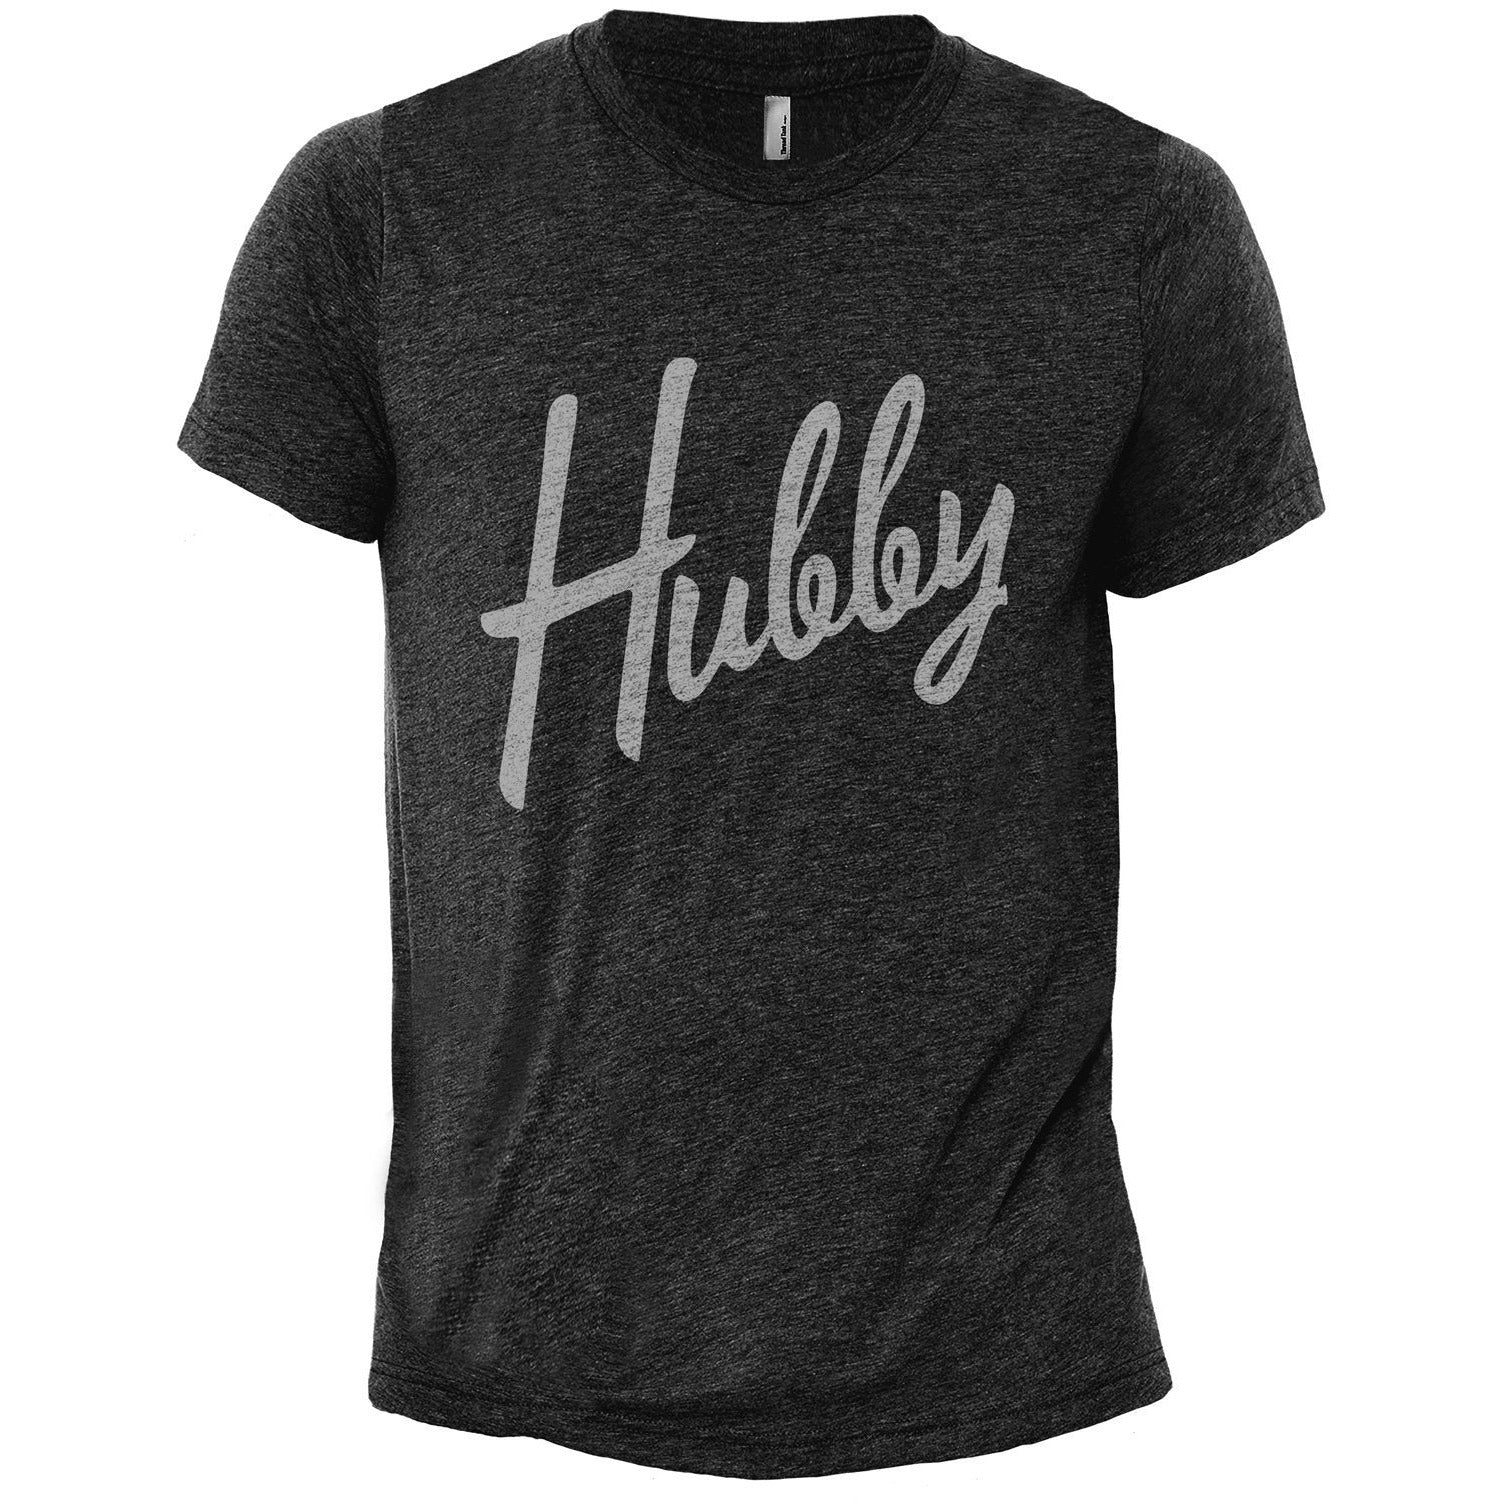 Hubby Cursive Heather Grey Printed Graphic Men's Crew T-Shirt Tee